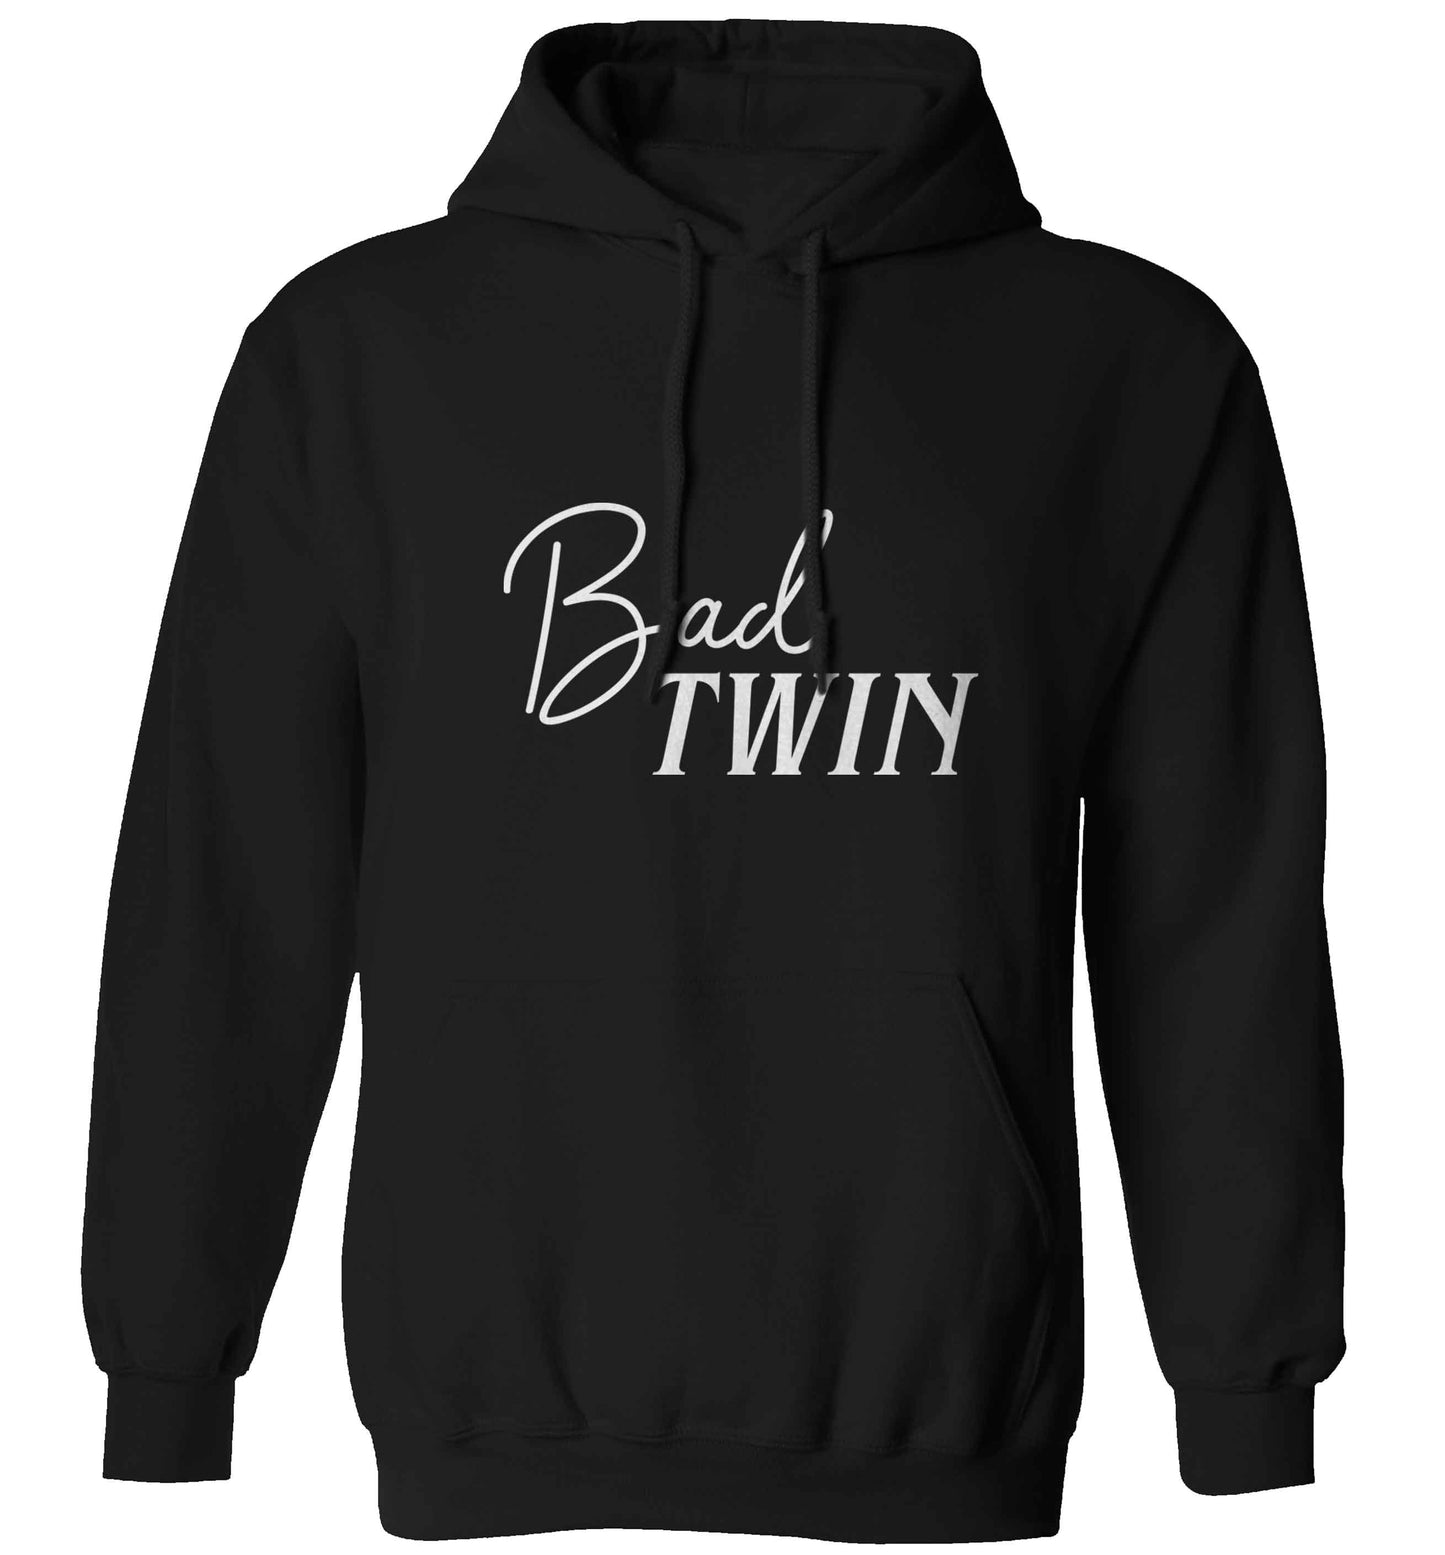 Bad twin adults unisex black hoodie 2XL